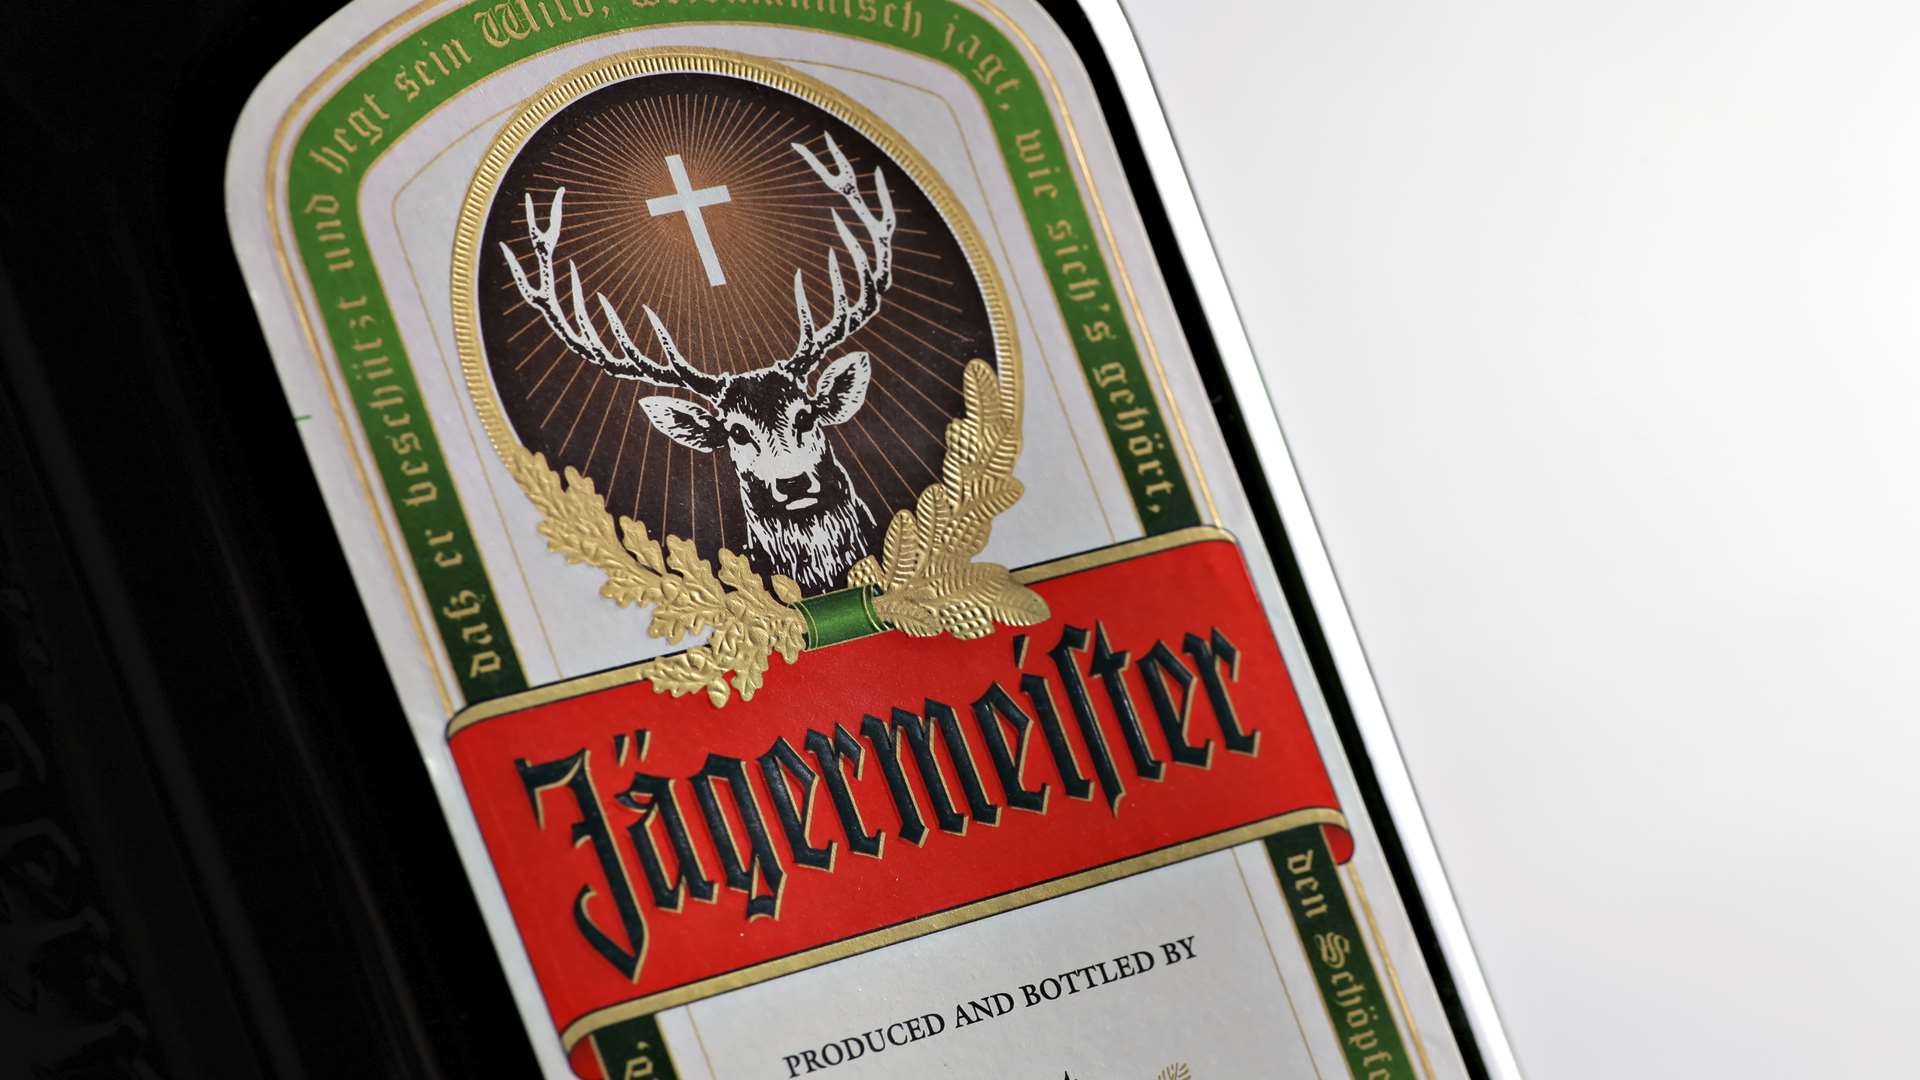 Jägermeister is mixed with Red Bull to make Jägerbombs